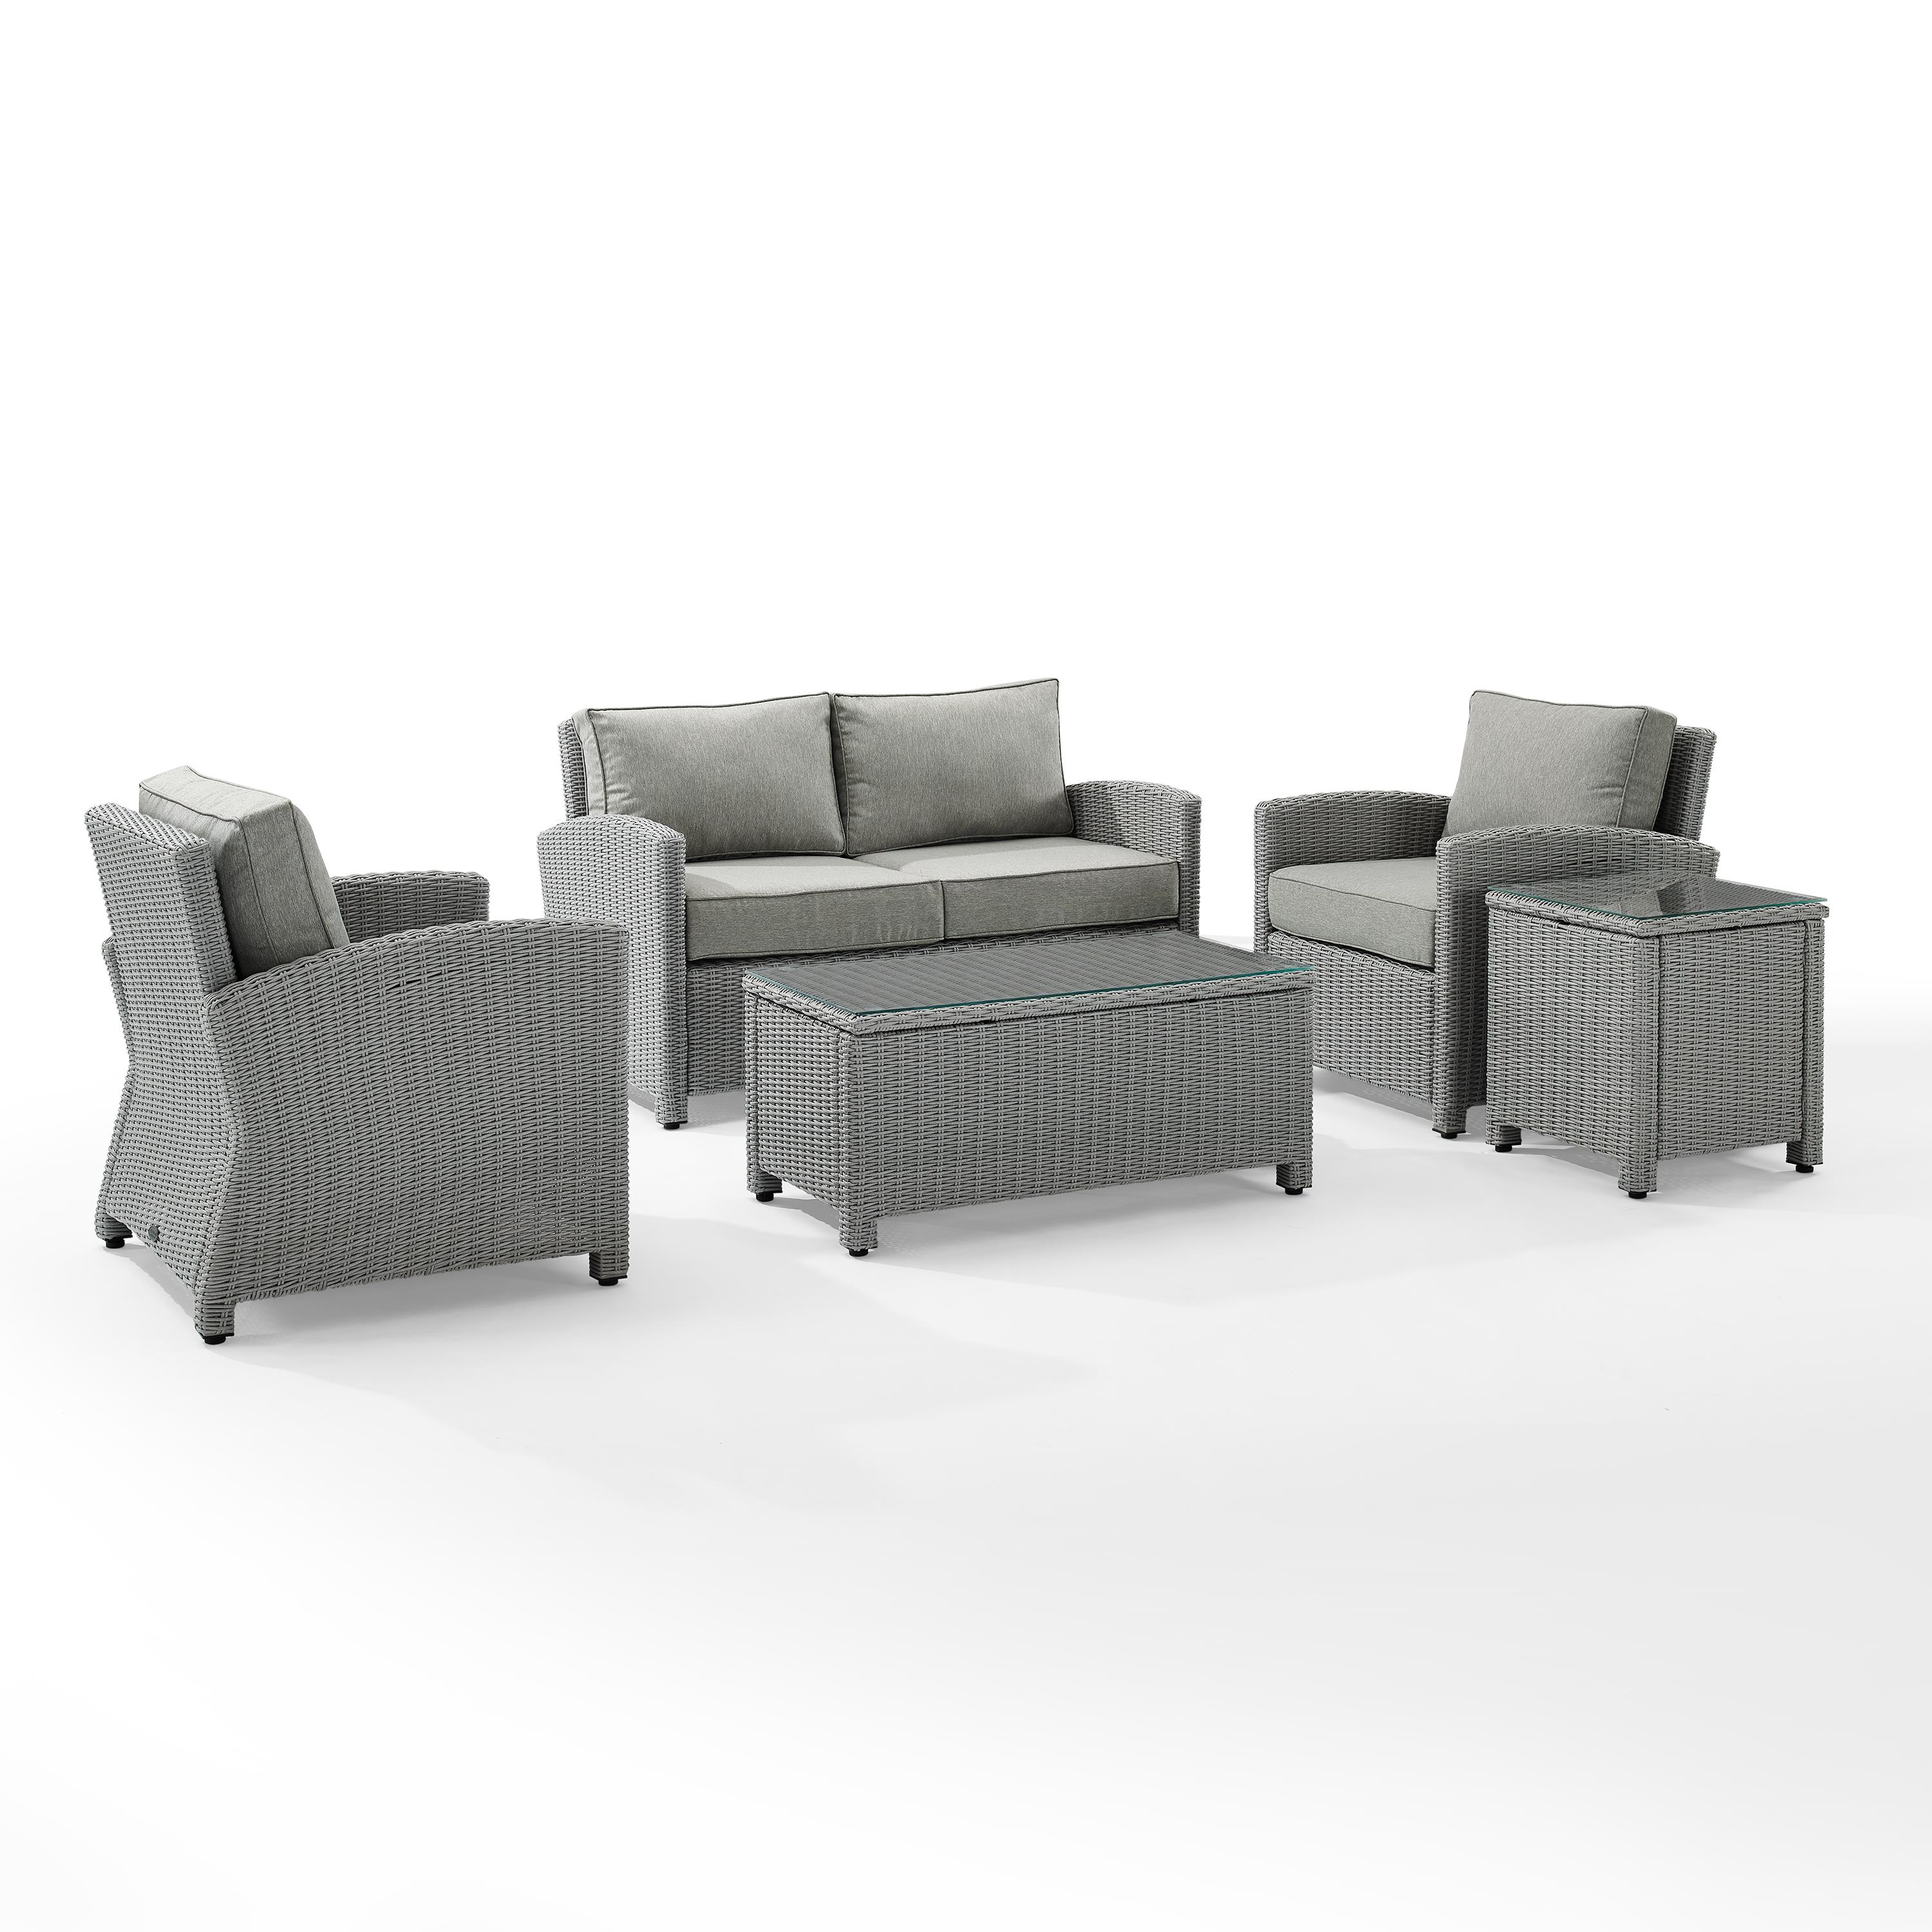 Crosley Bradenton 5 Piece Wicker Patio Sofa Set in Gray - image 2 of 7